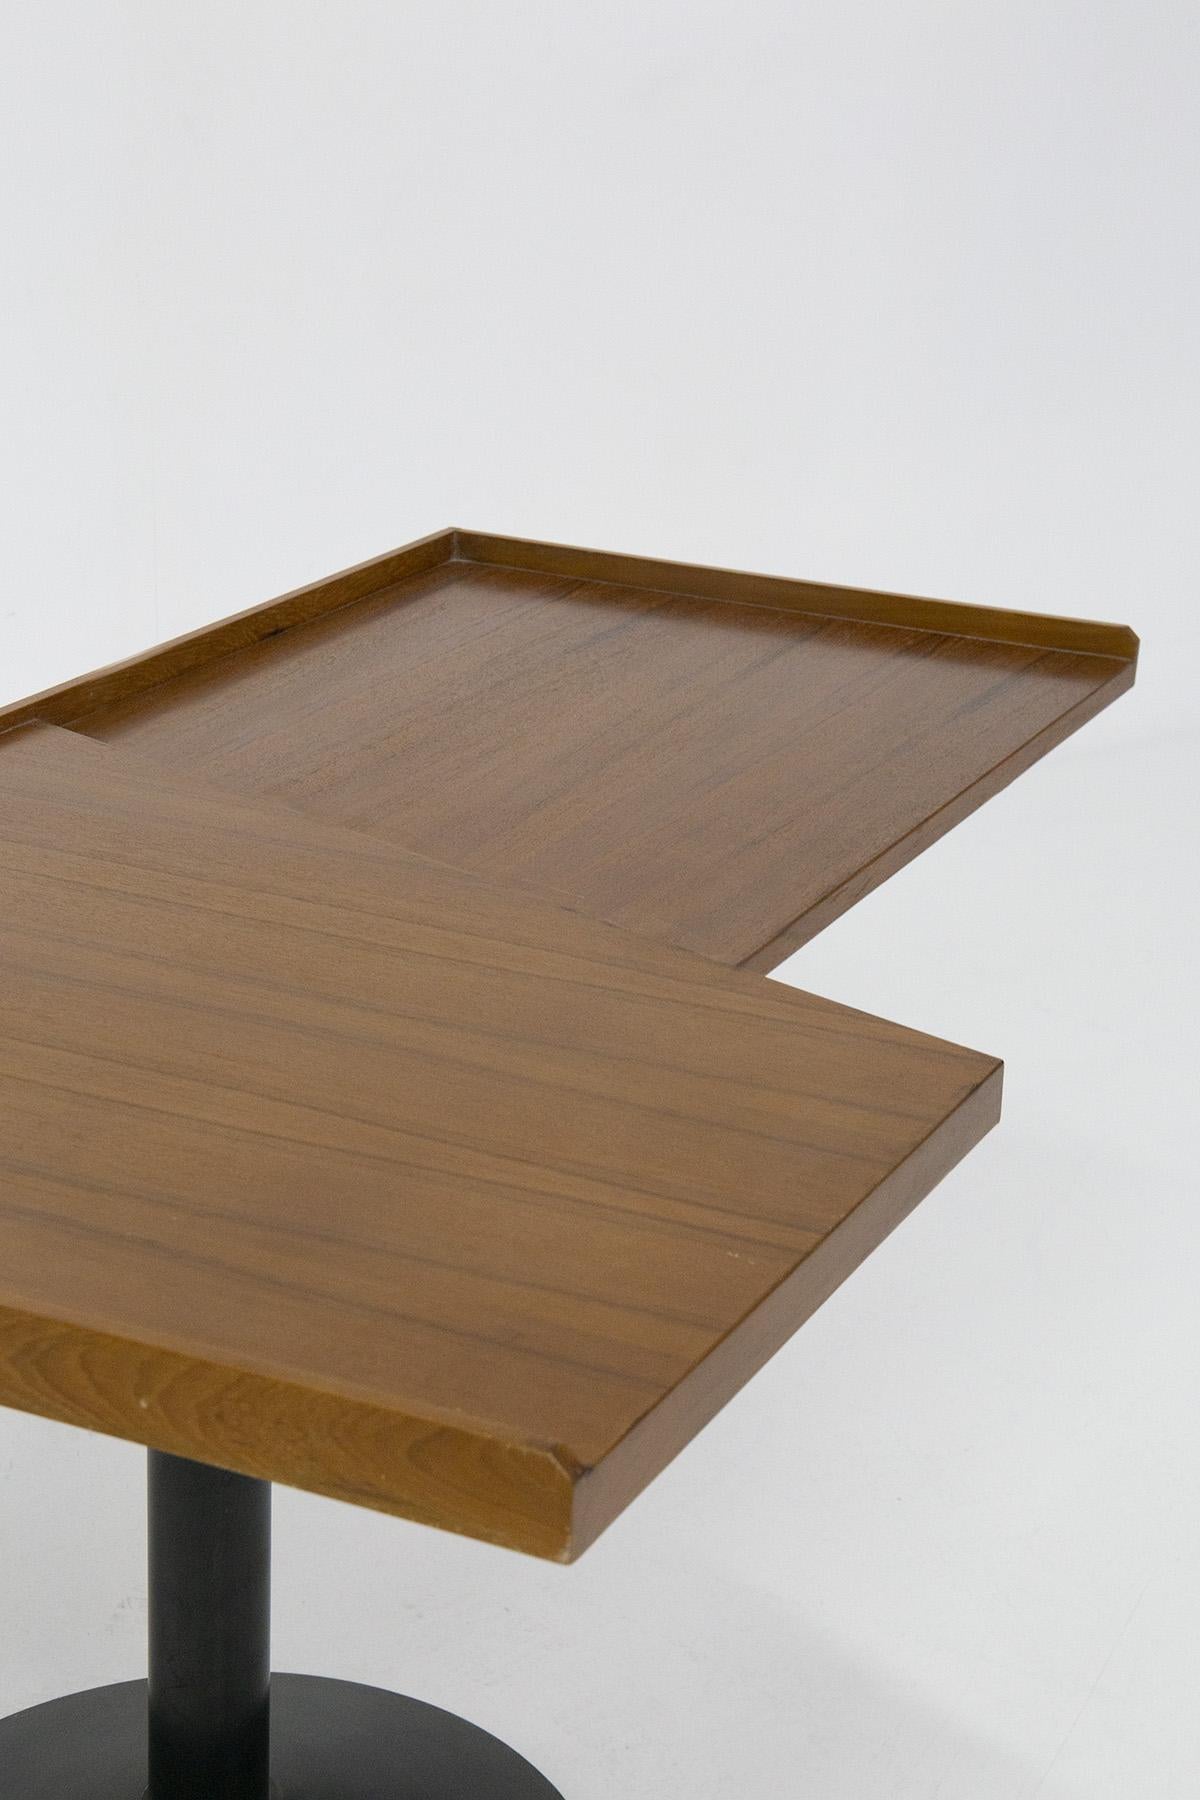 Franco Albini for Poggi Model 840 Stadera Desk In Good Condition For Sale In Milano, IT